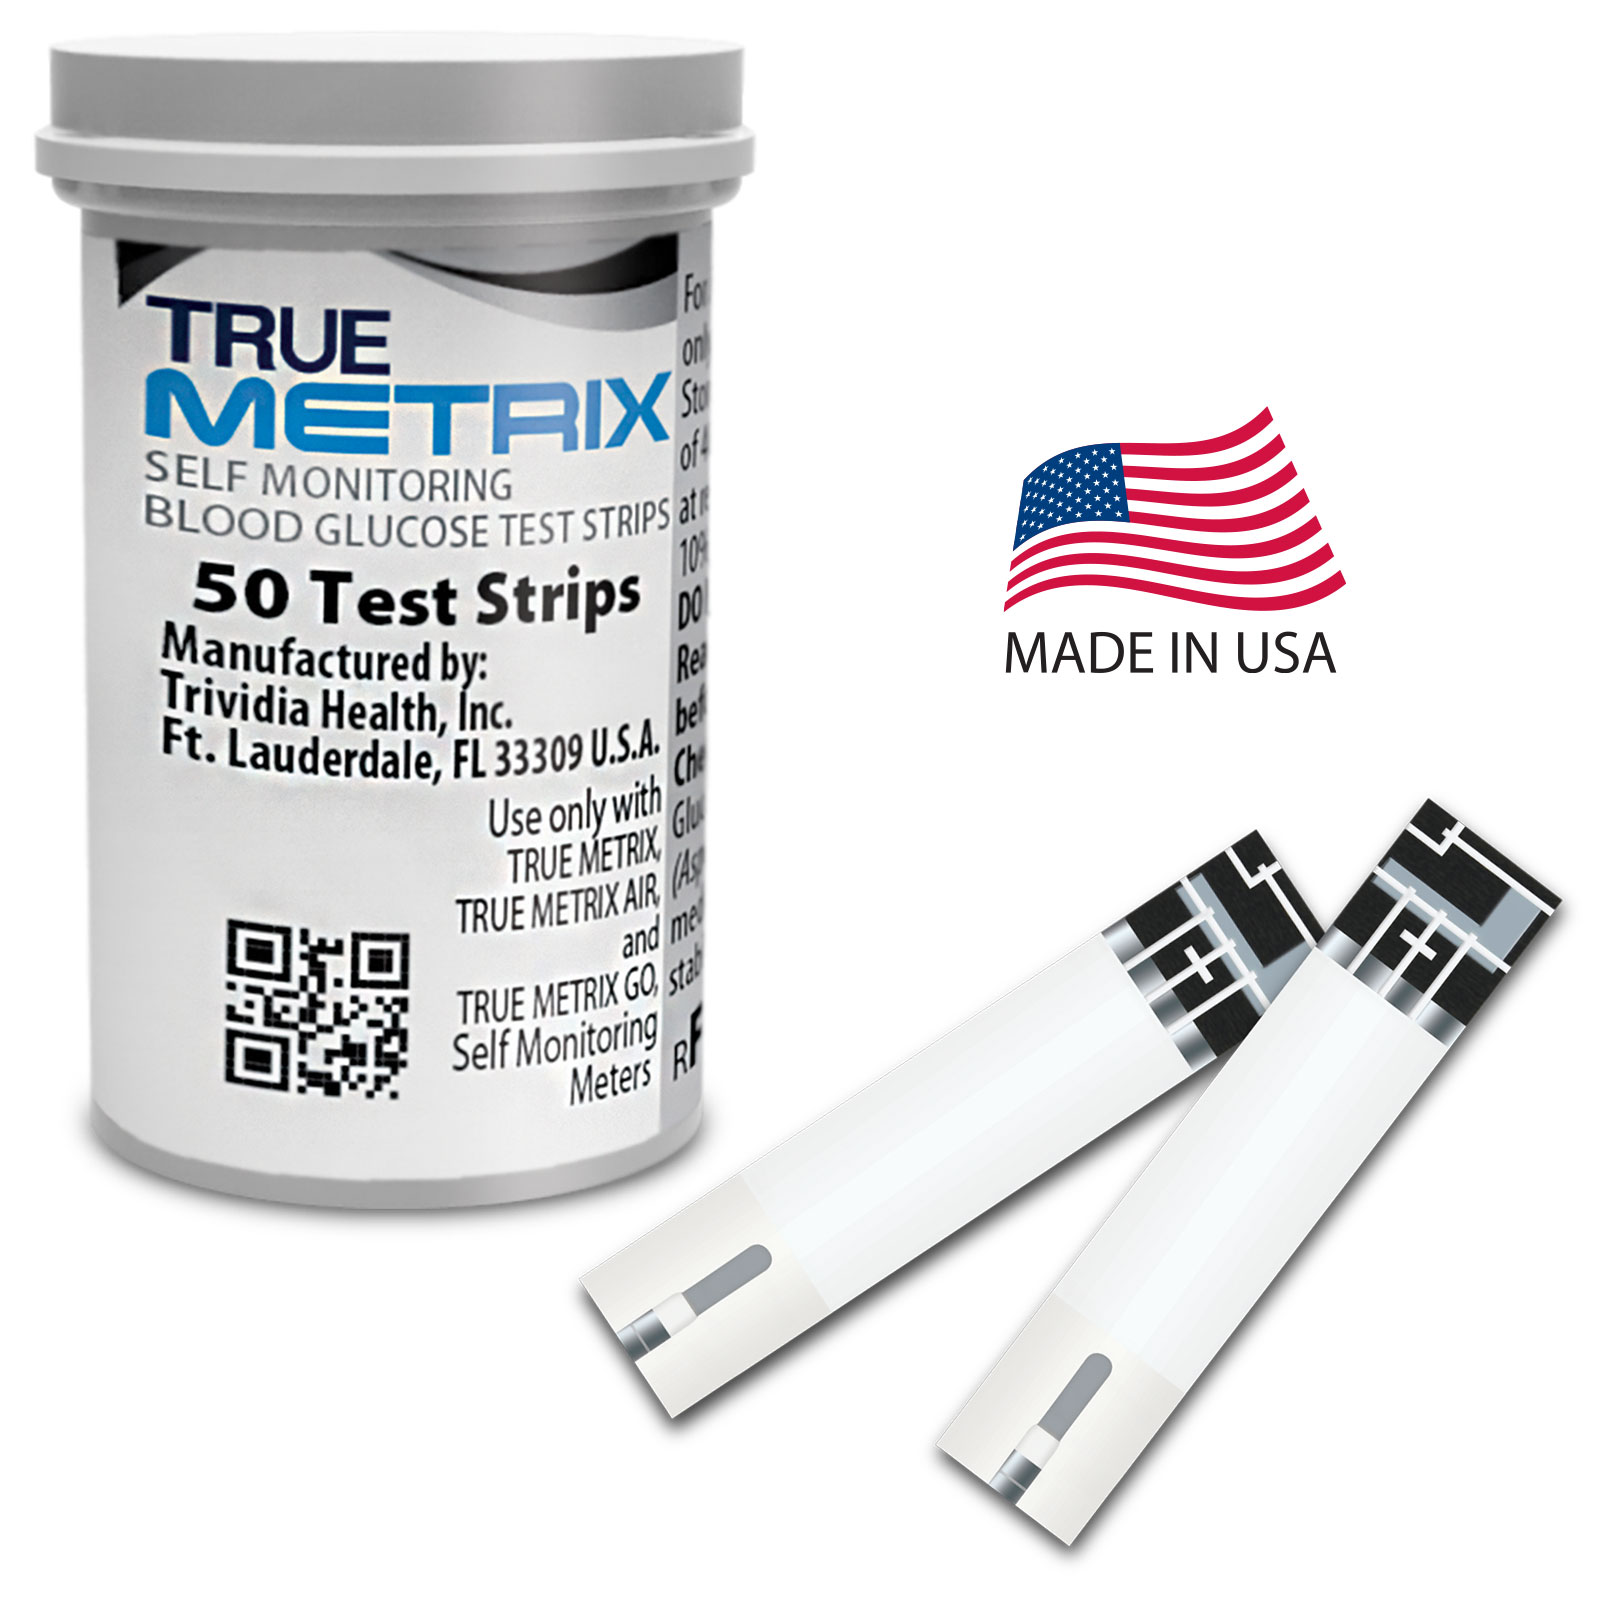 TRUE METRIX® Blood Glucose Test Strips NFRS 50ct - 2 Pack (100 Test Strips) - image 2 of 6